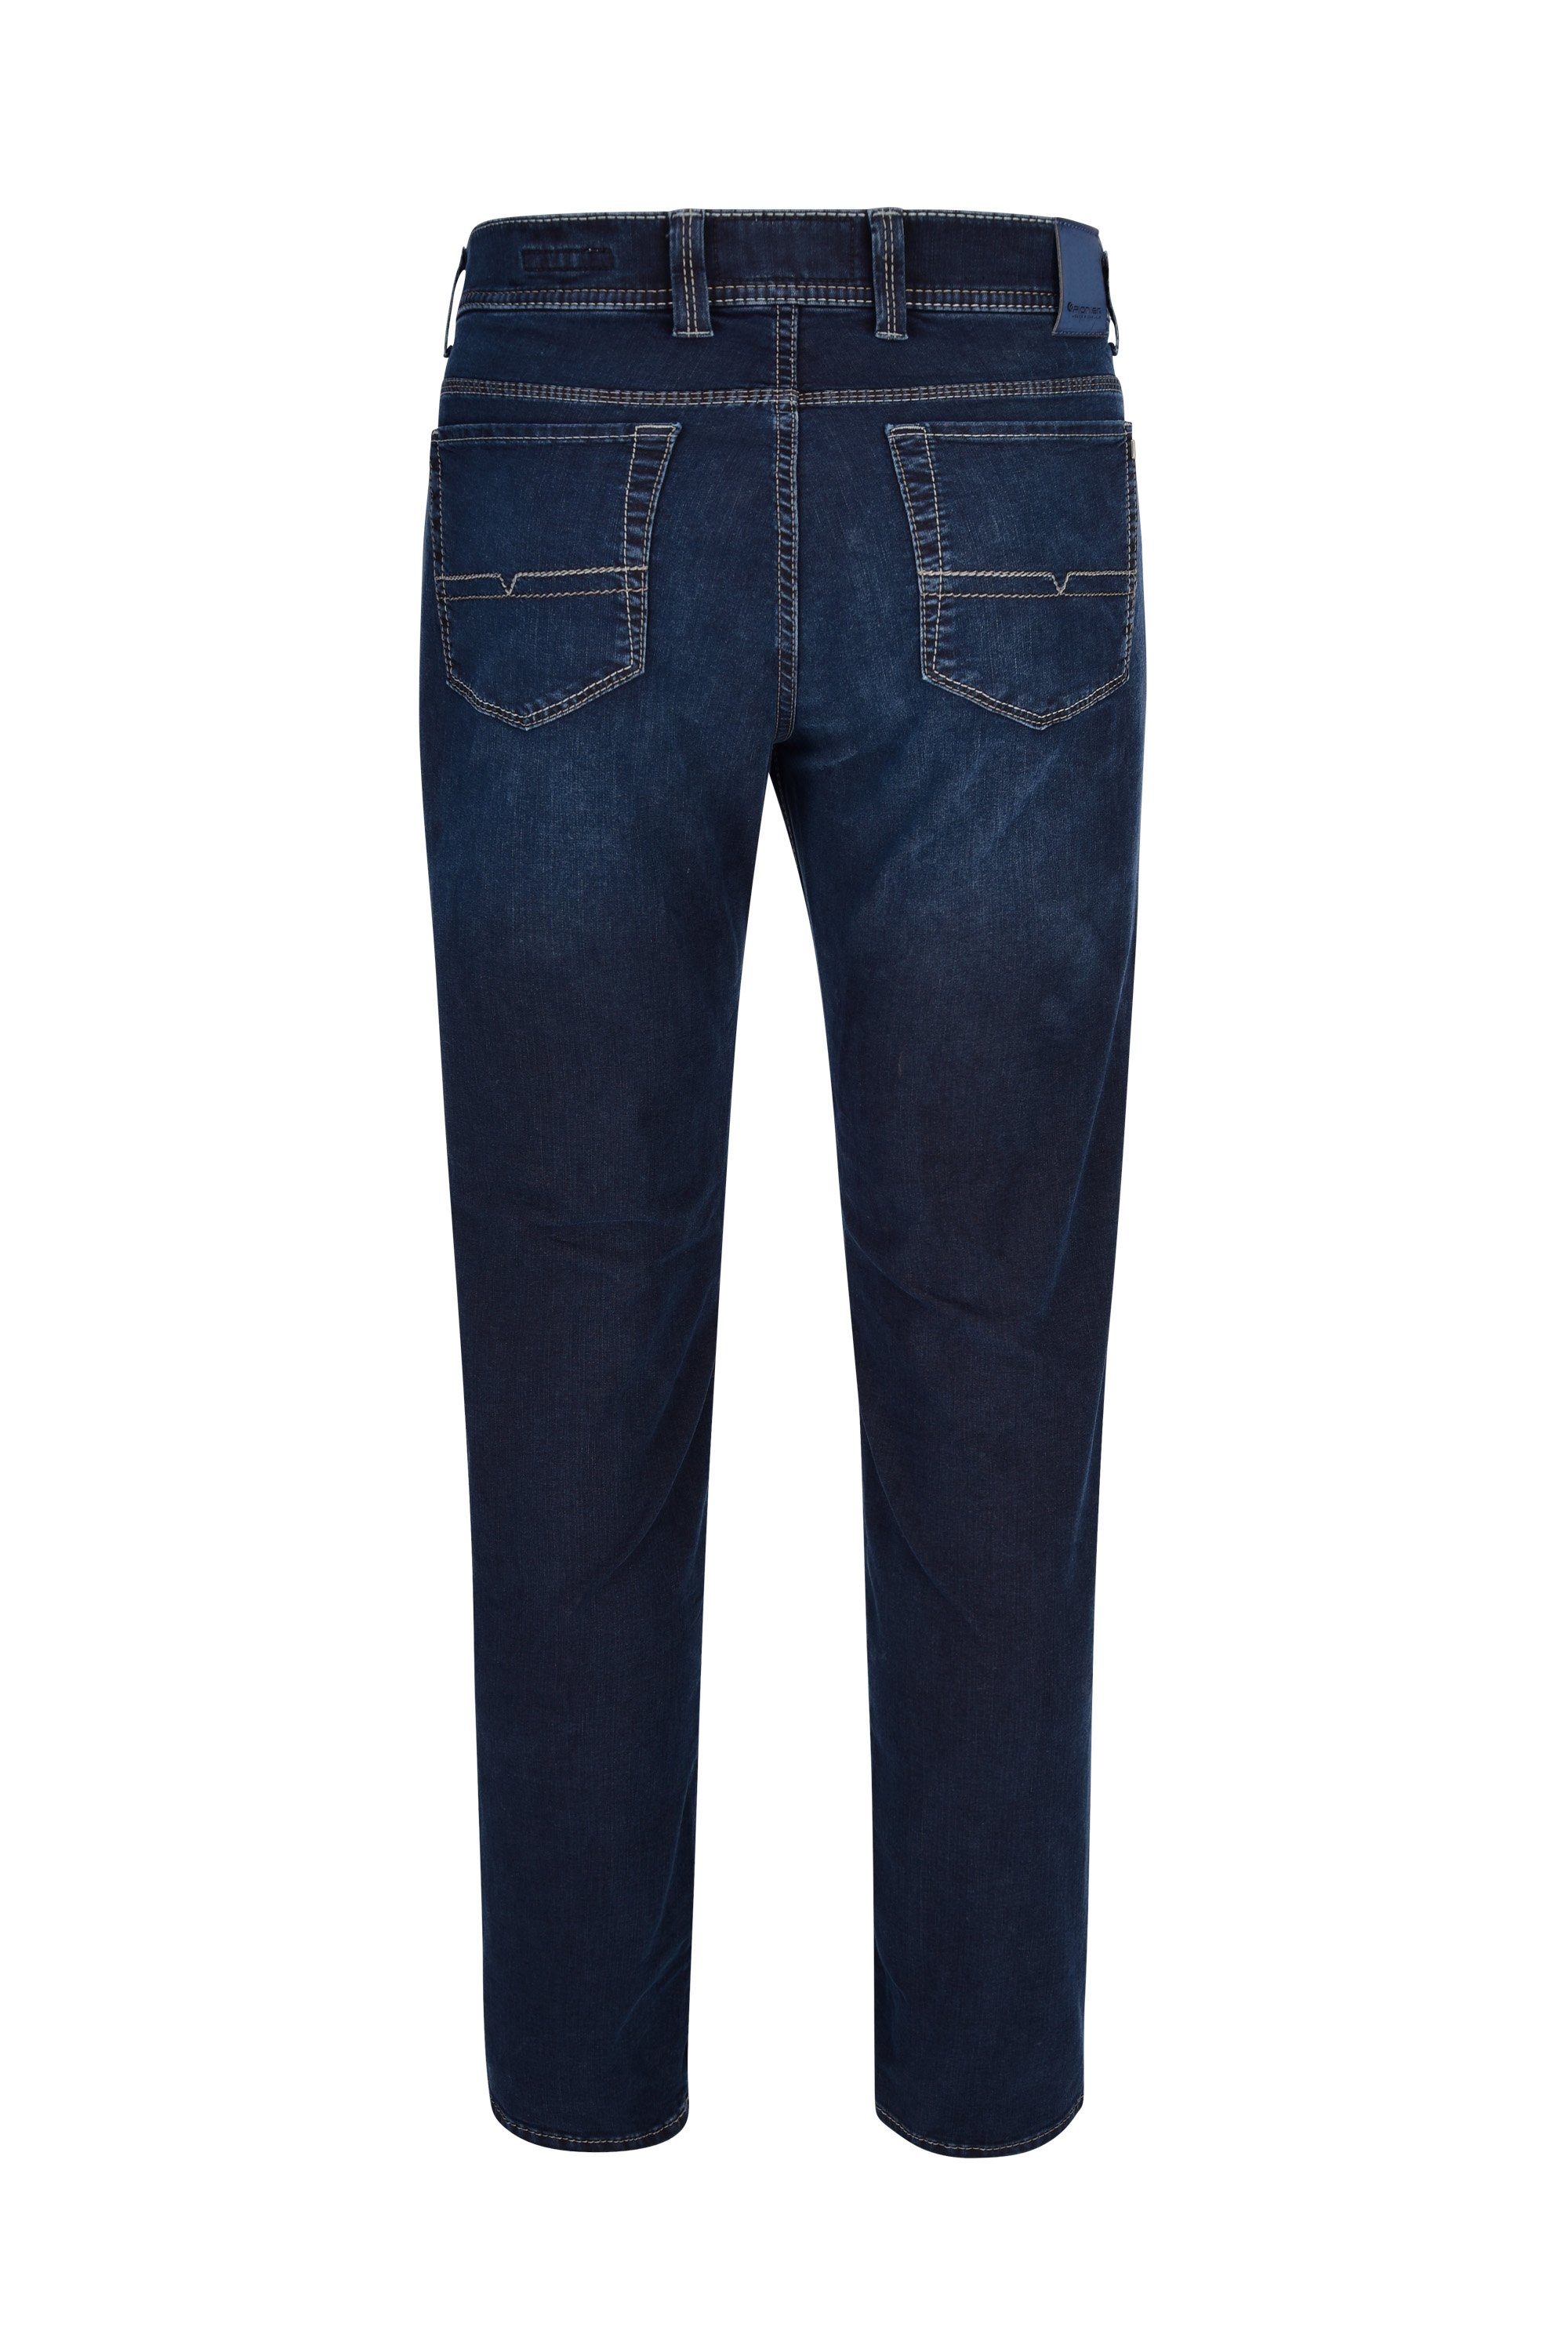 5-Pocket-Jeans 6101.665 2079 Pionier dark blue PIONIER THOMAS